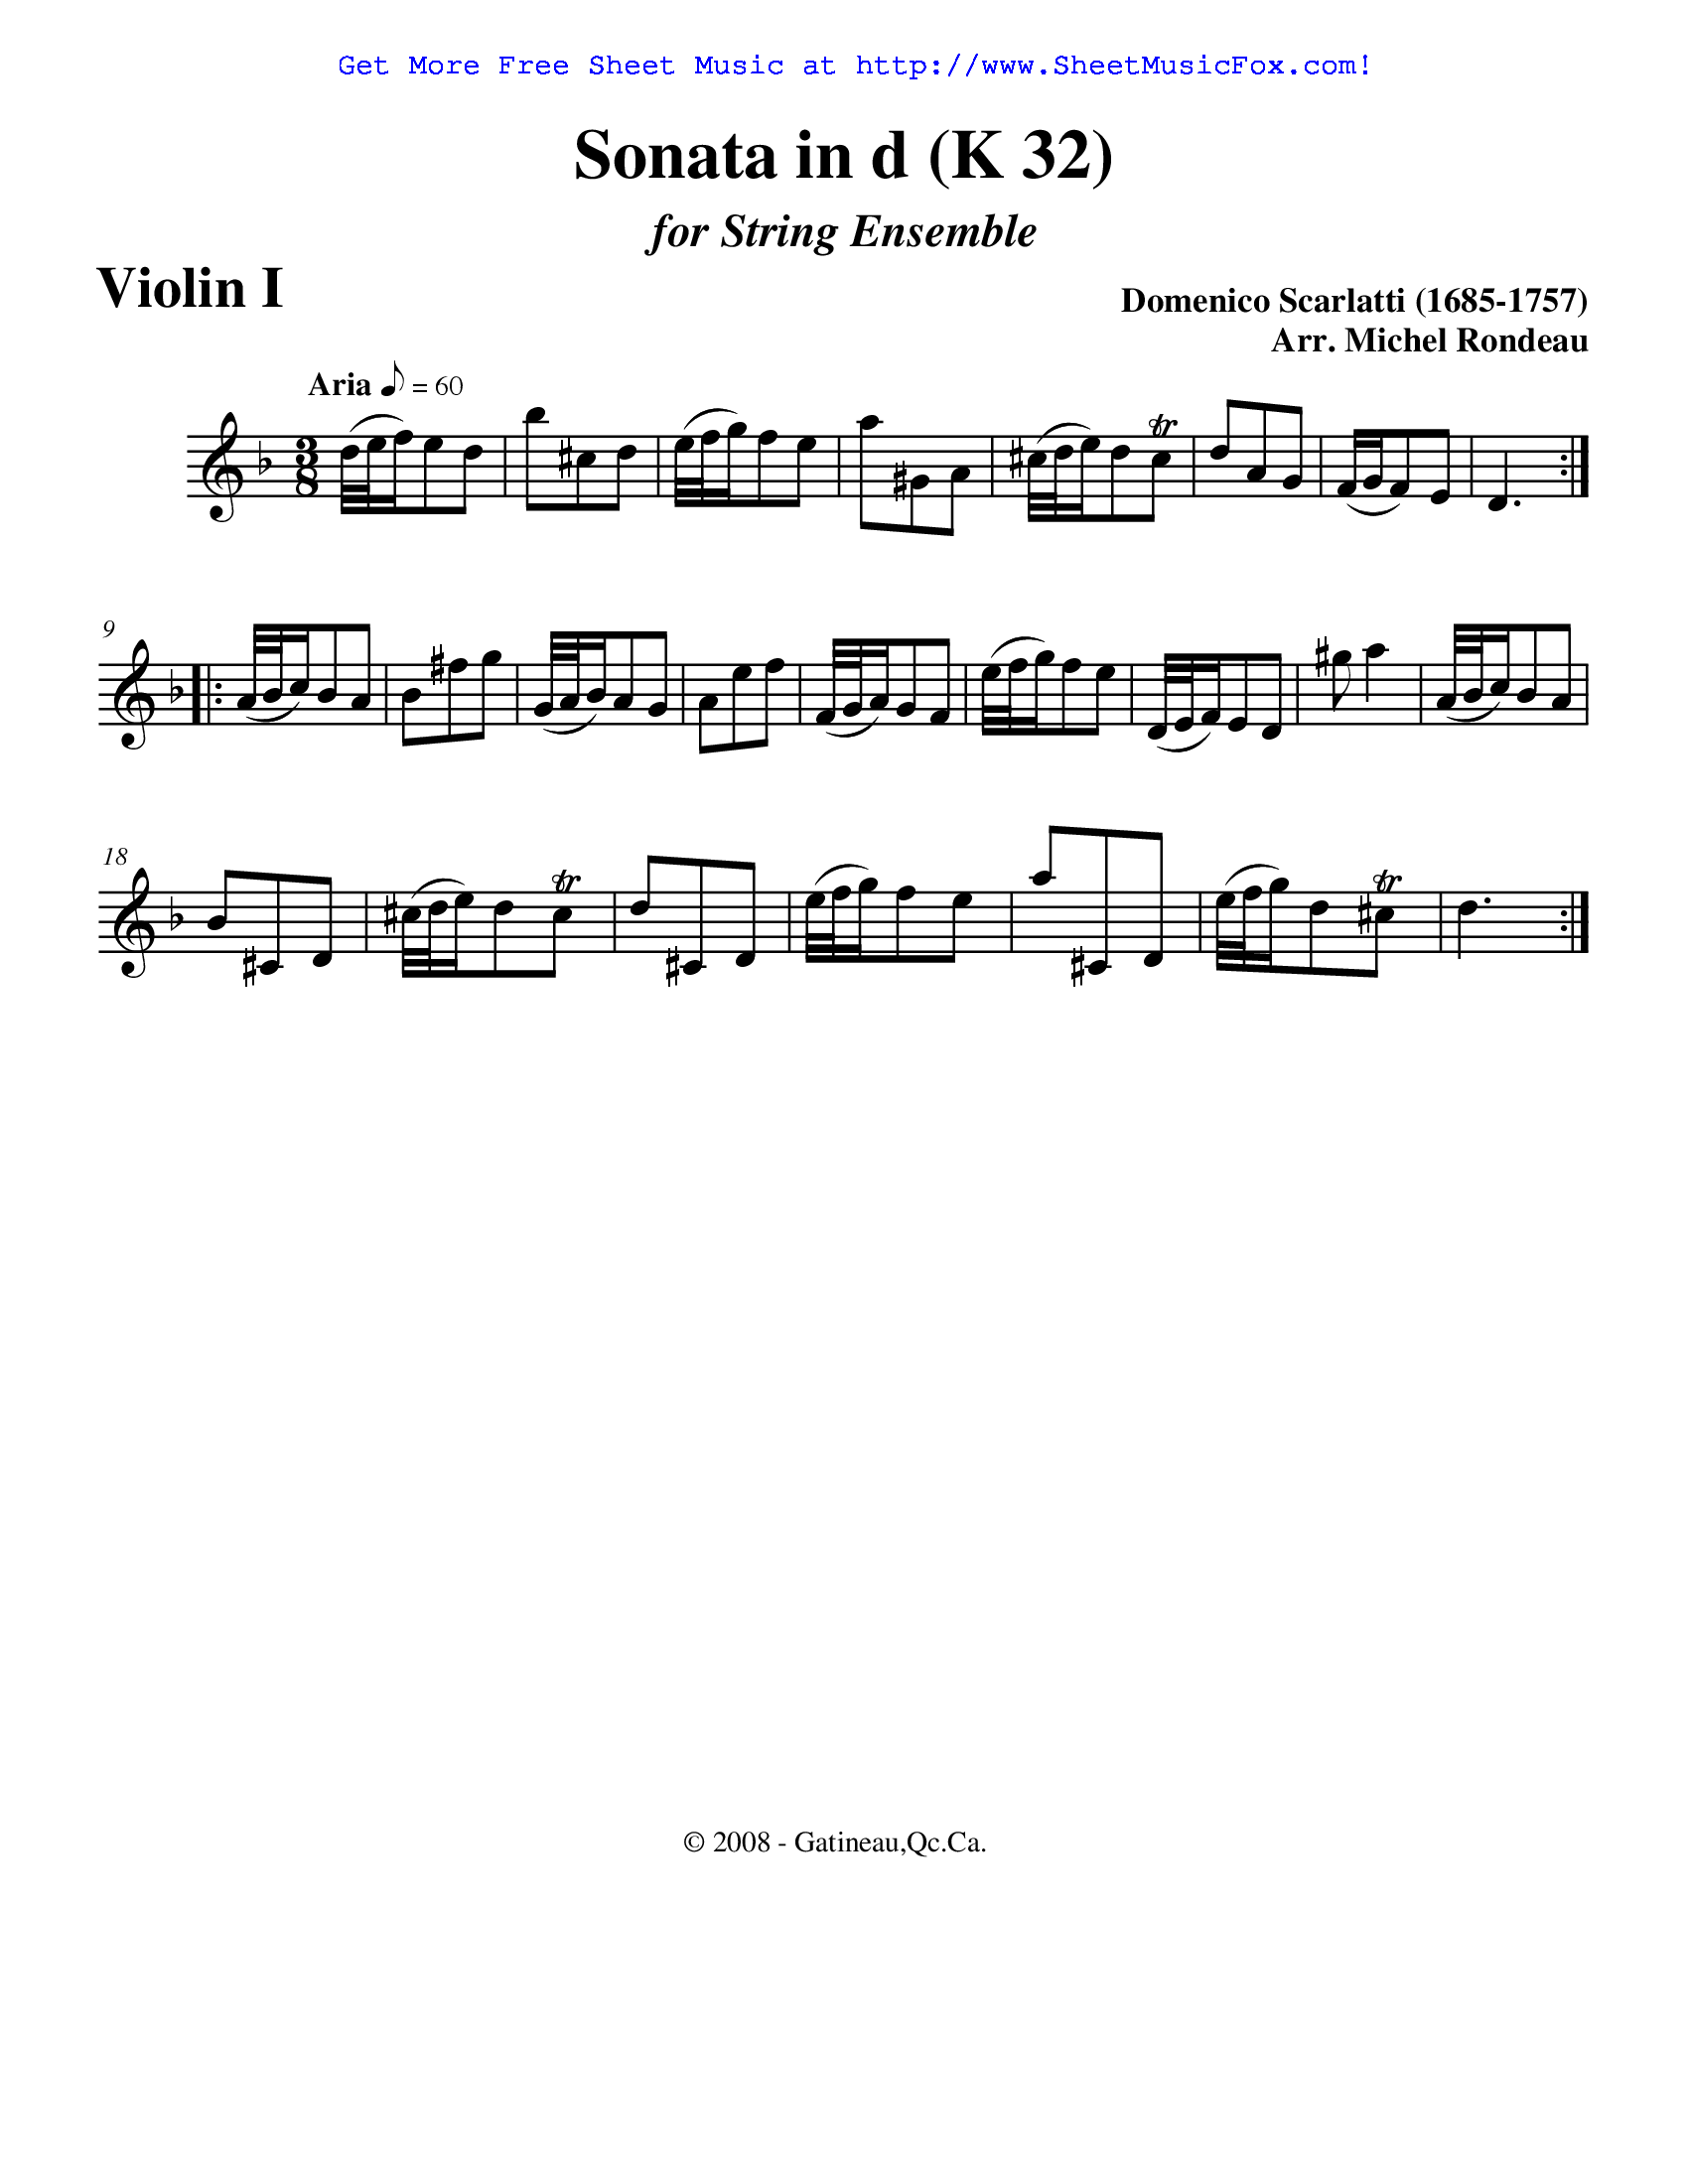 scarlatti sonatas sheet music